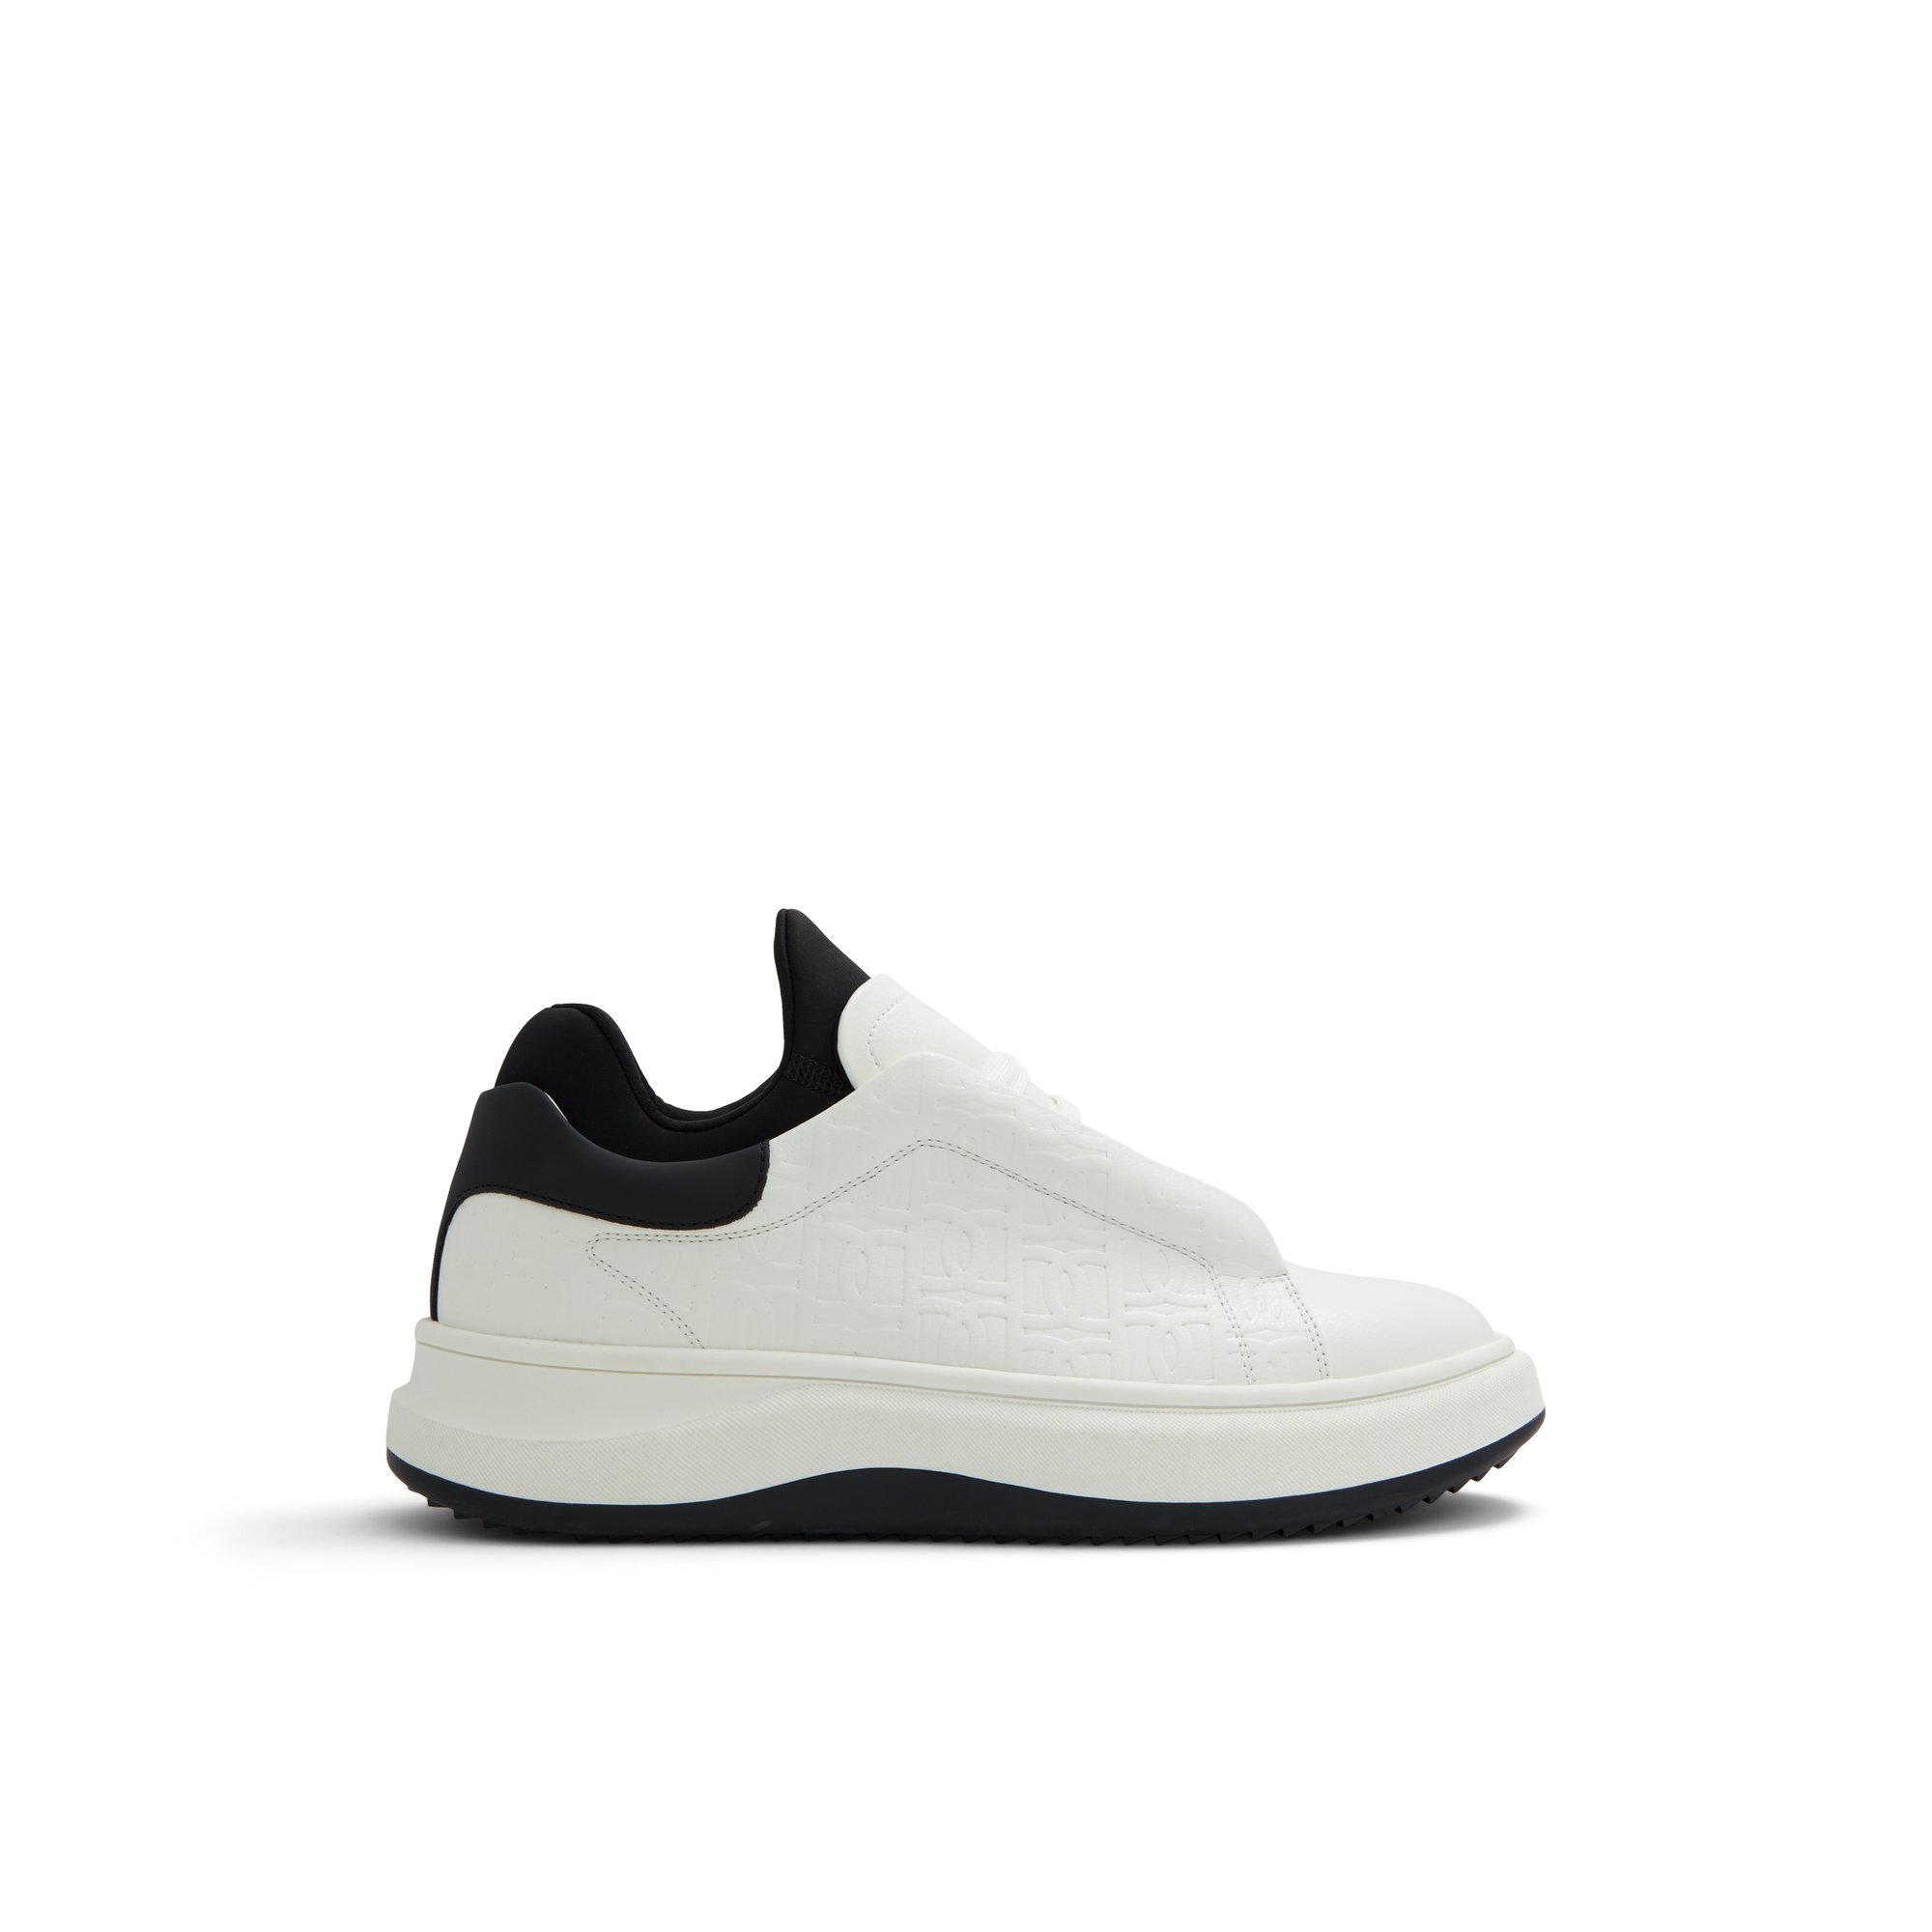 ALDO Midwavespec - Men's Low Top Sneakers - White